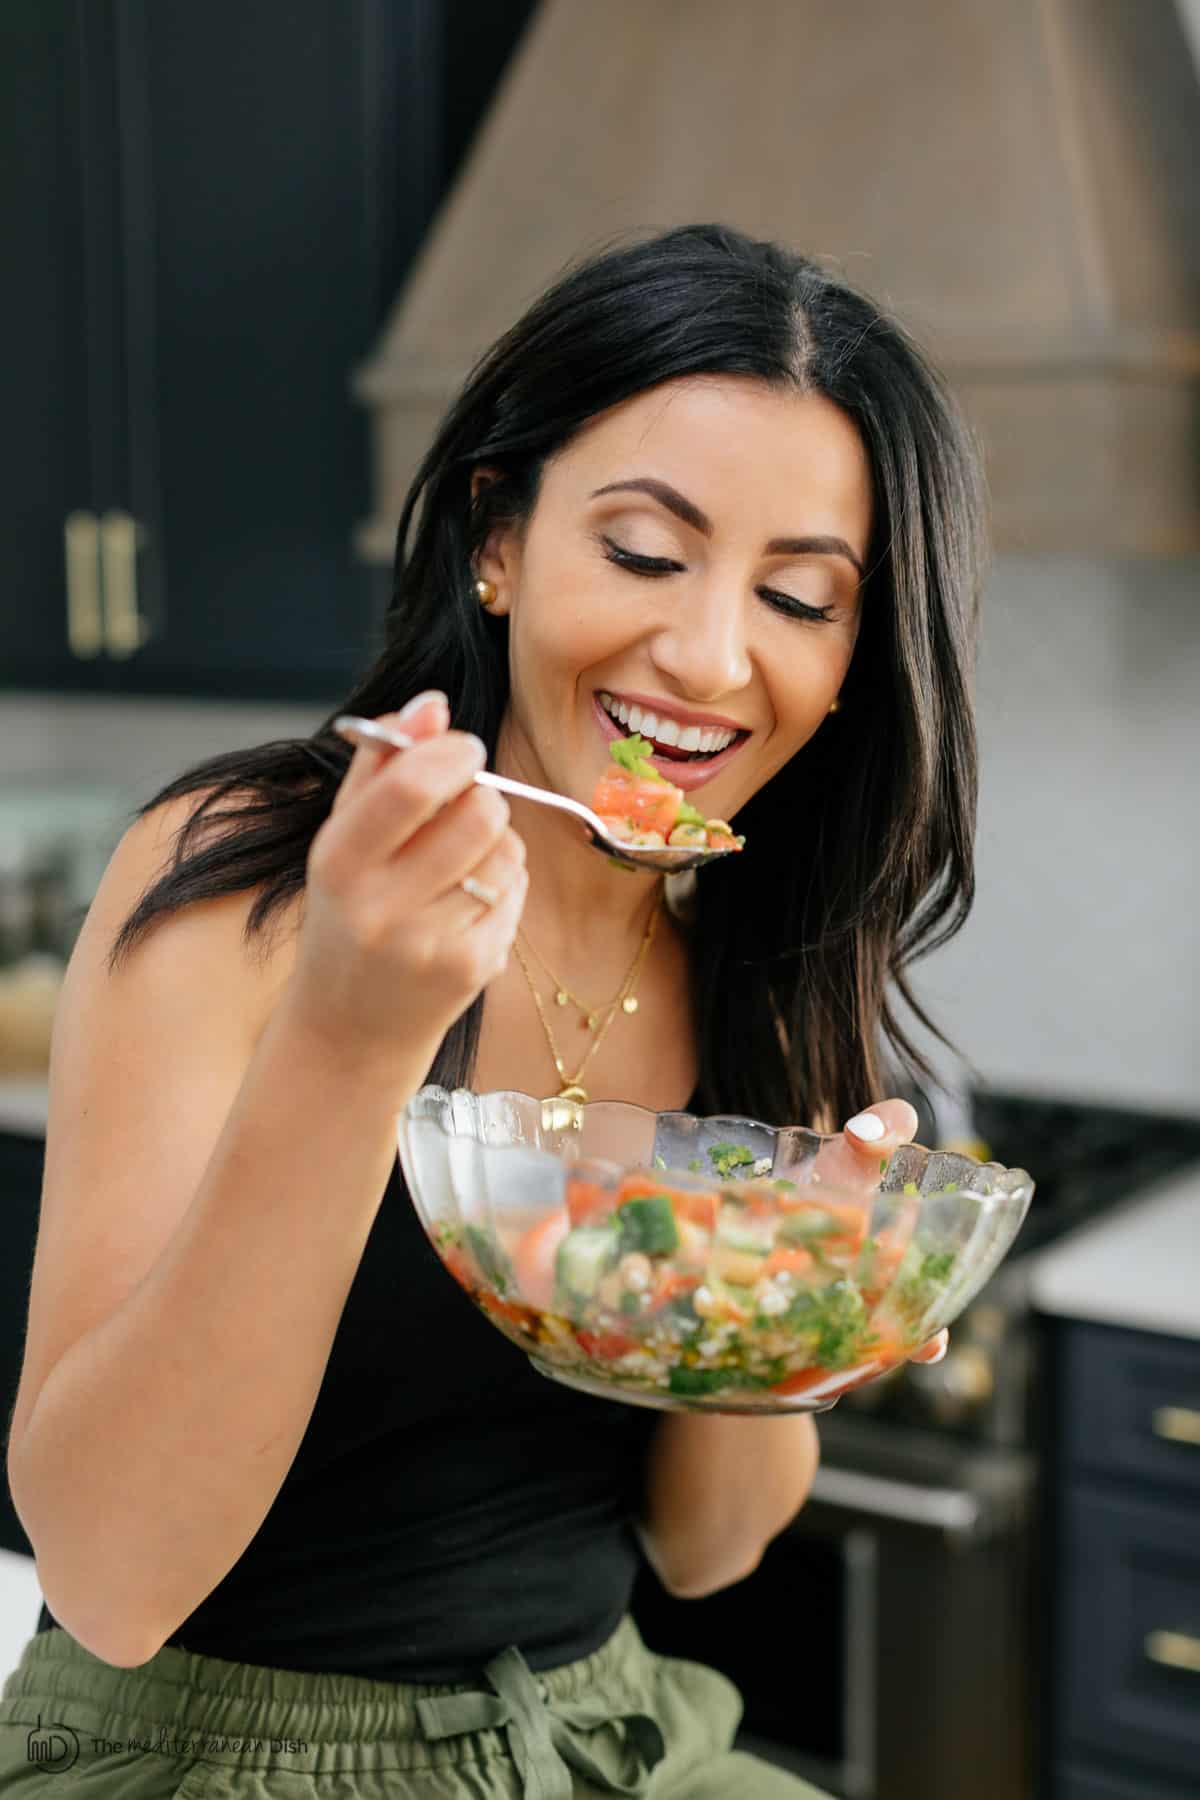 Suzy Karadsheh of The Mediterranean Dish enjoying her favorite chickpea salad